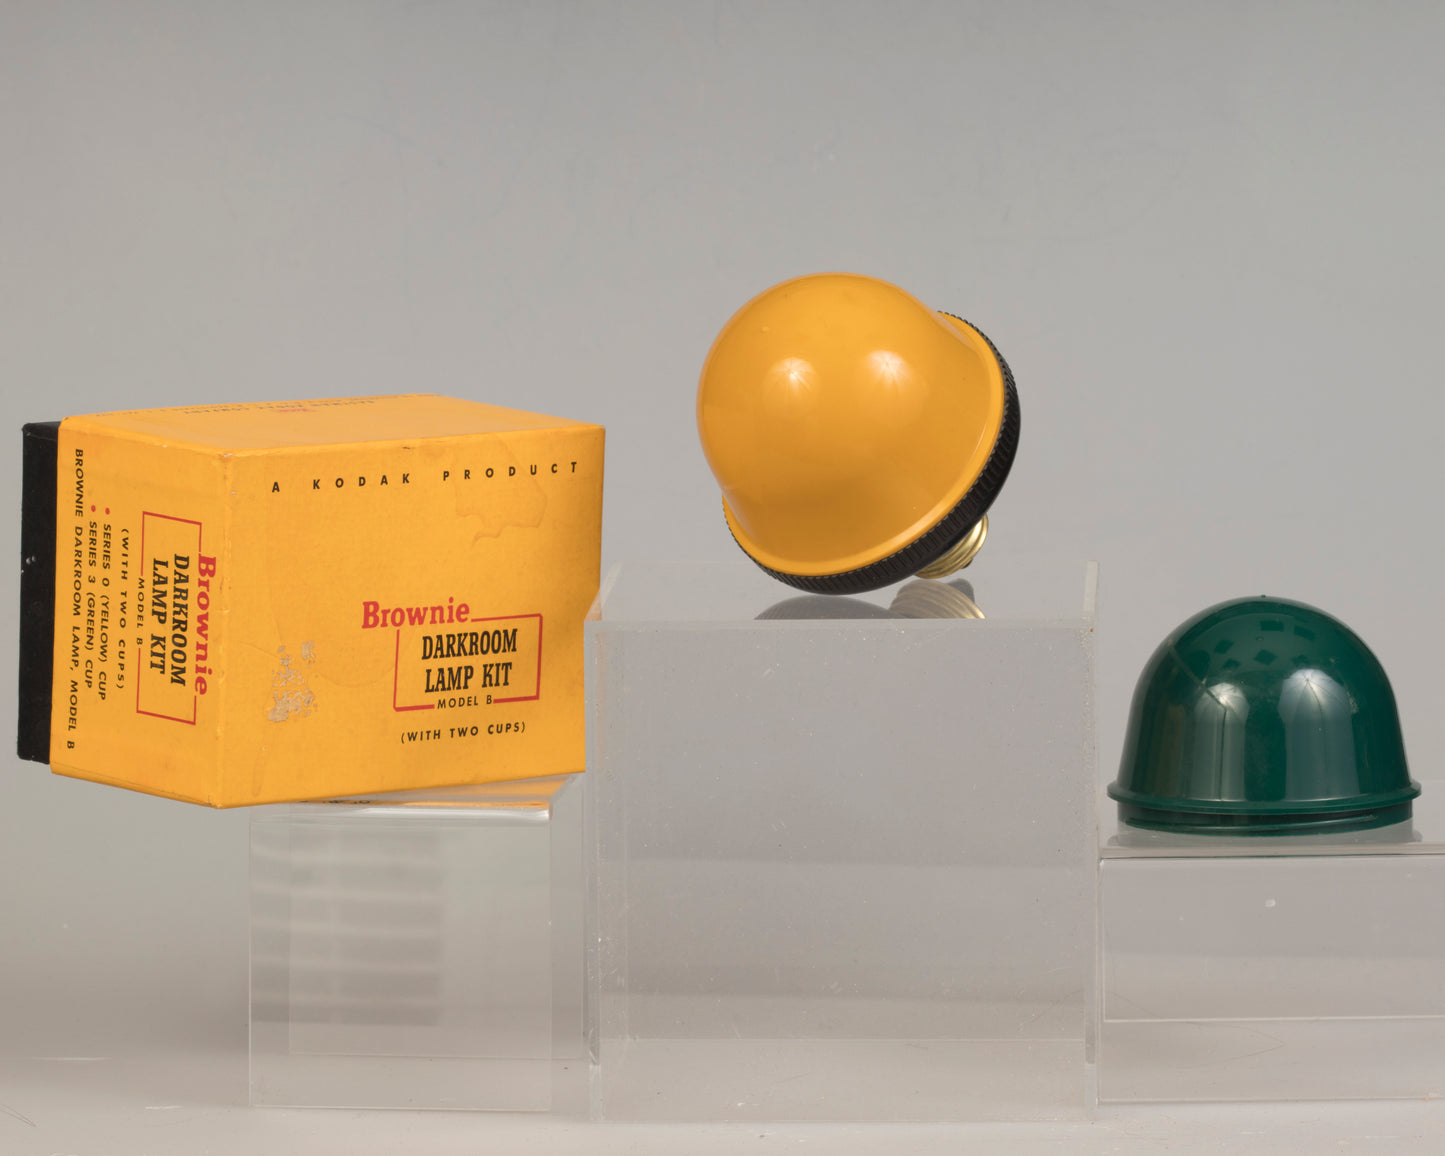 Kodak Brownie Darkroom Lamp Kit Model B (safelights) in original box